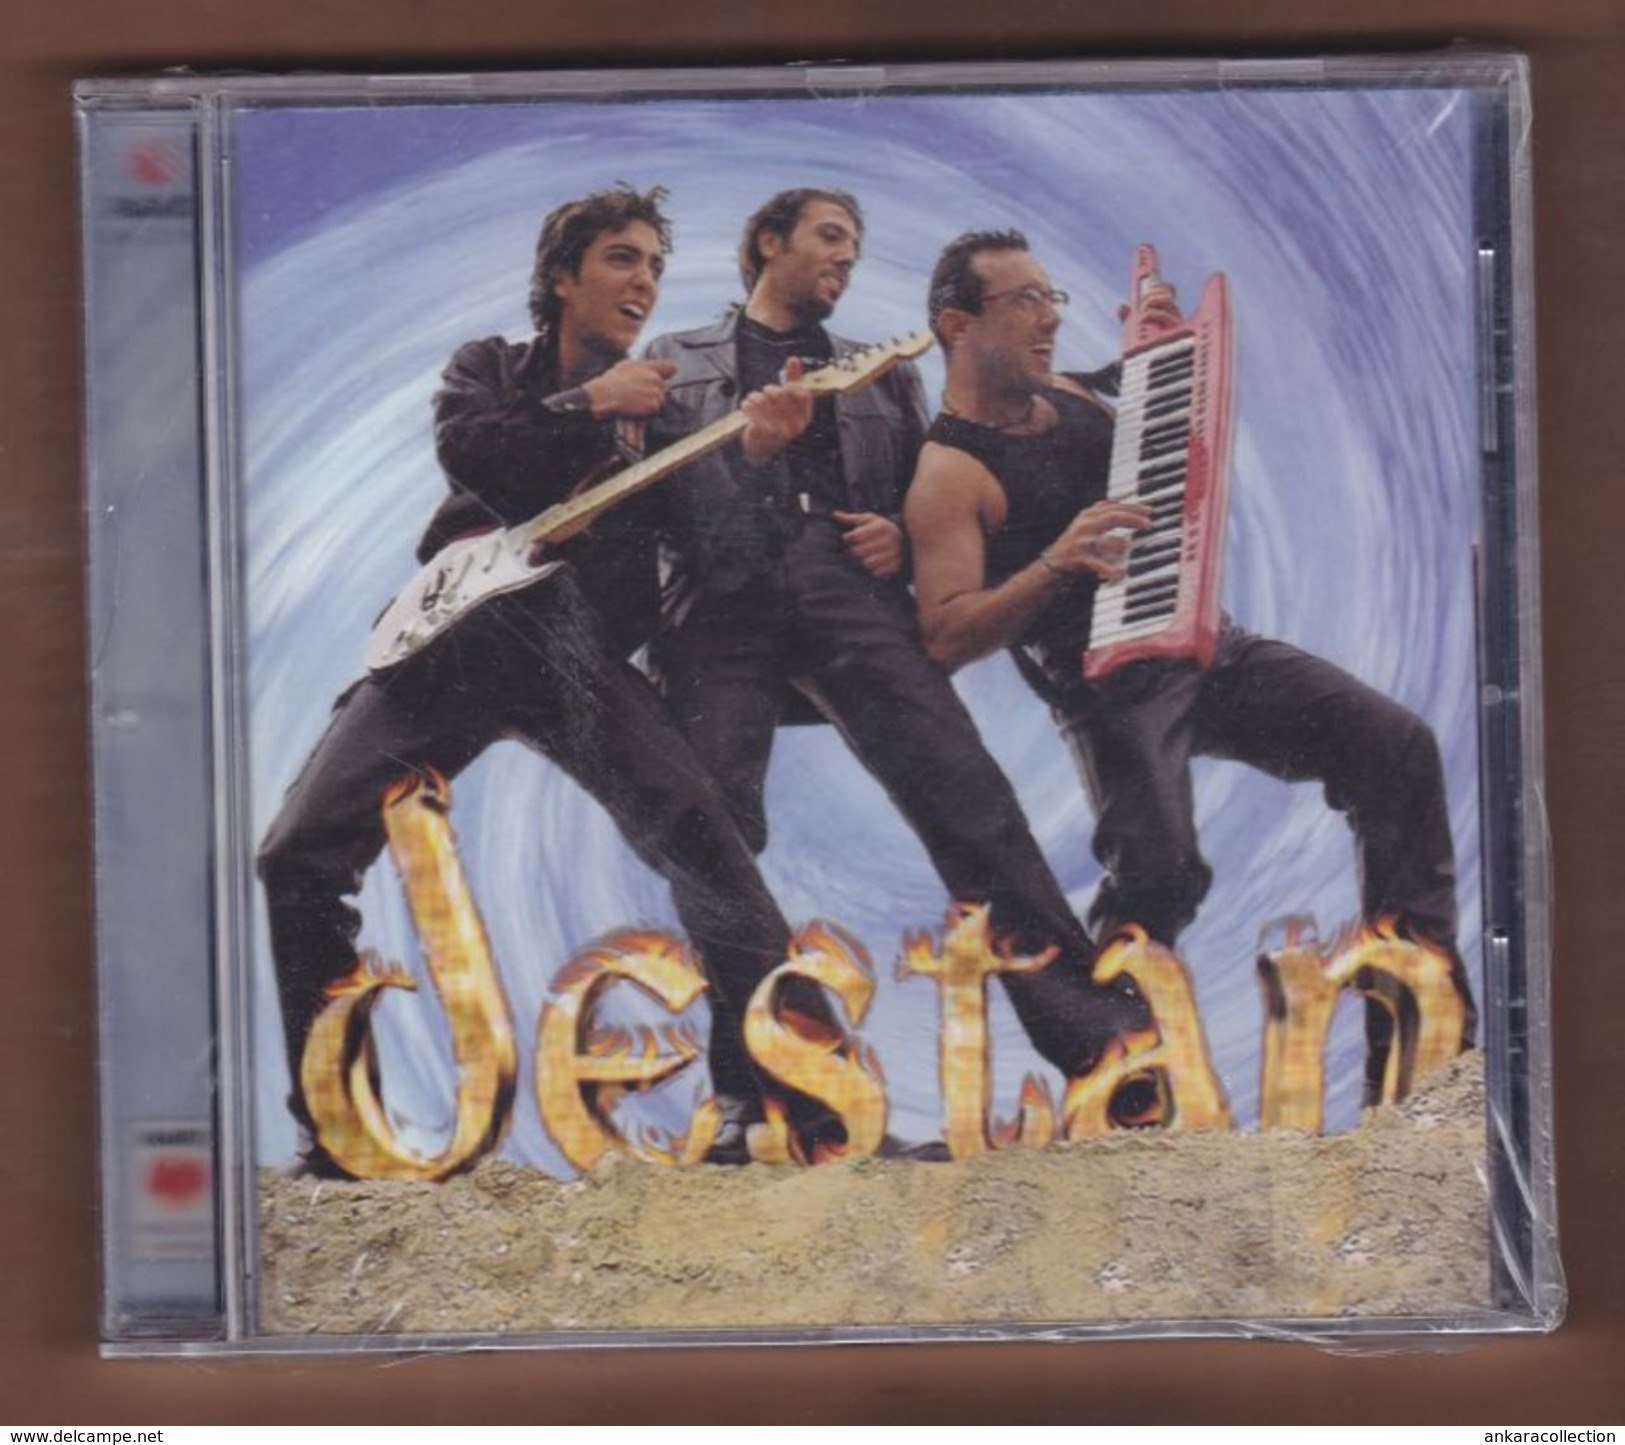 AC -  Destan BRAND NEW TURKISH MUSIC CD - World Music